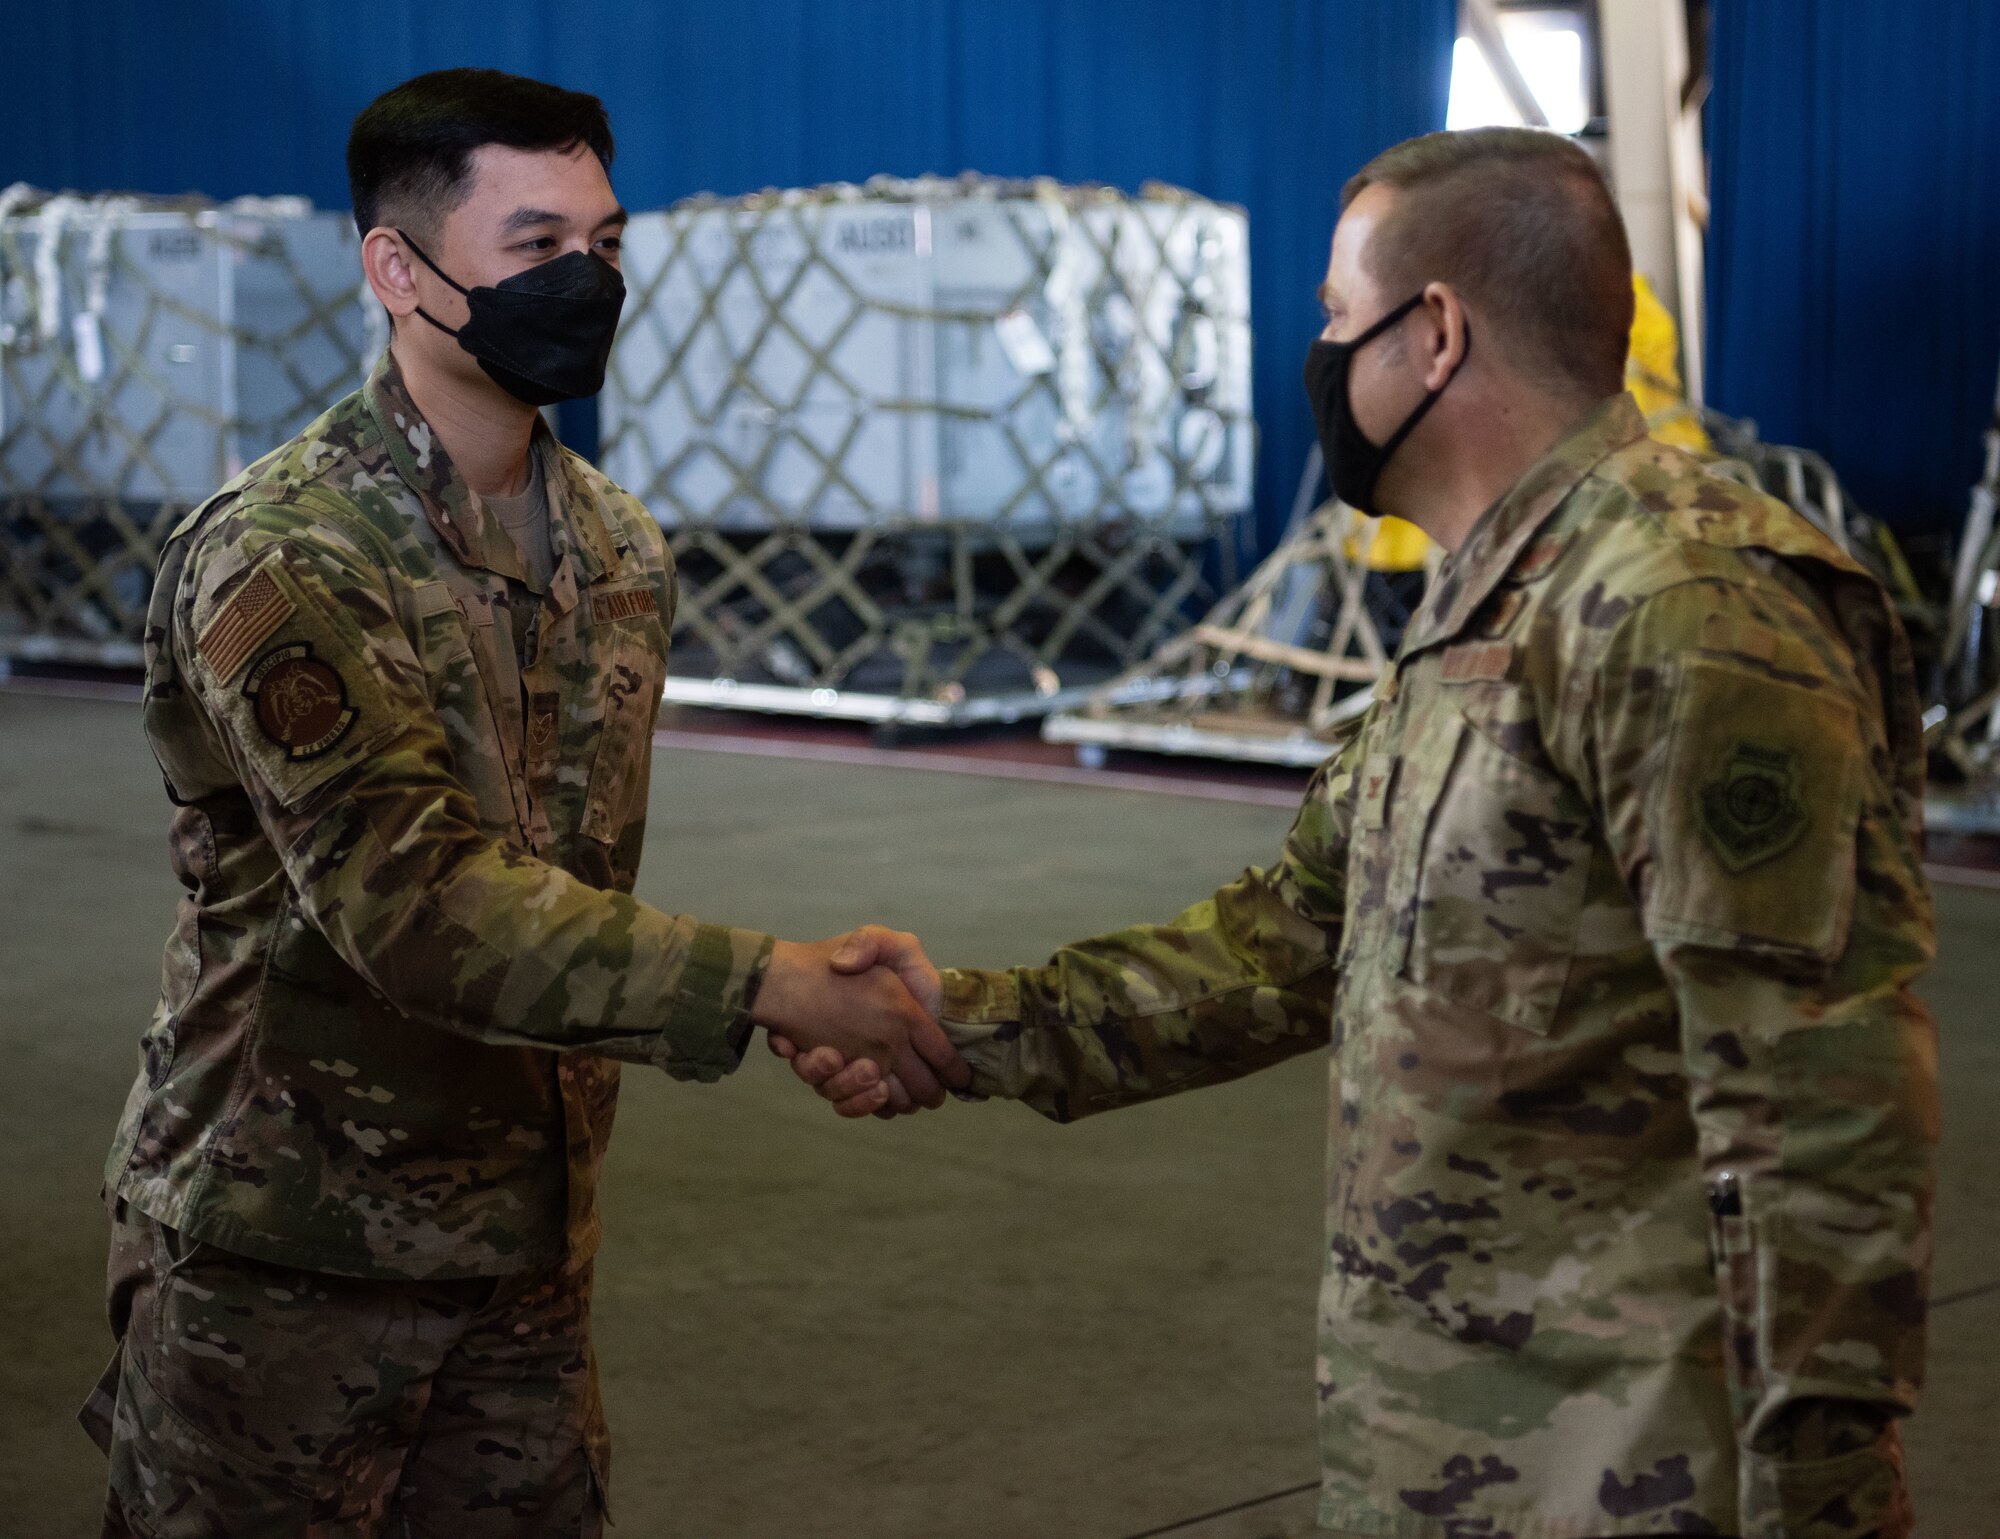 A military member accepts an award.